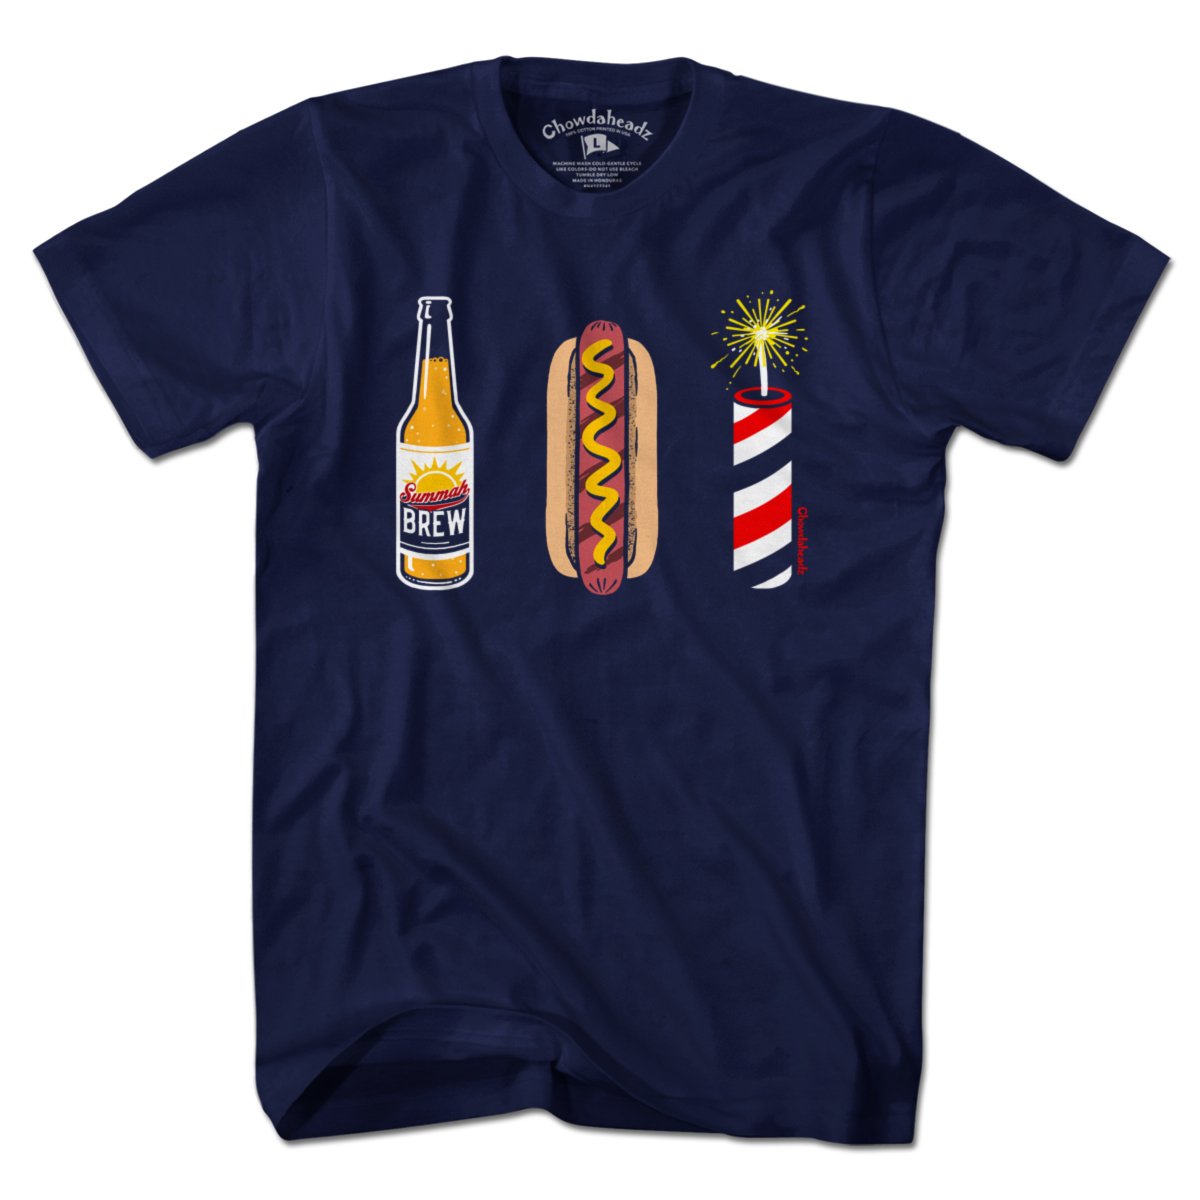 Beer, Hot Dog, Fireworks T-Shirt - Chowdaheadz